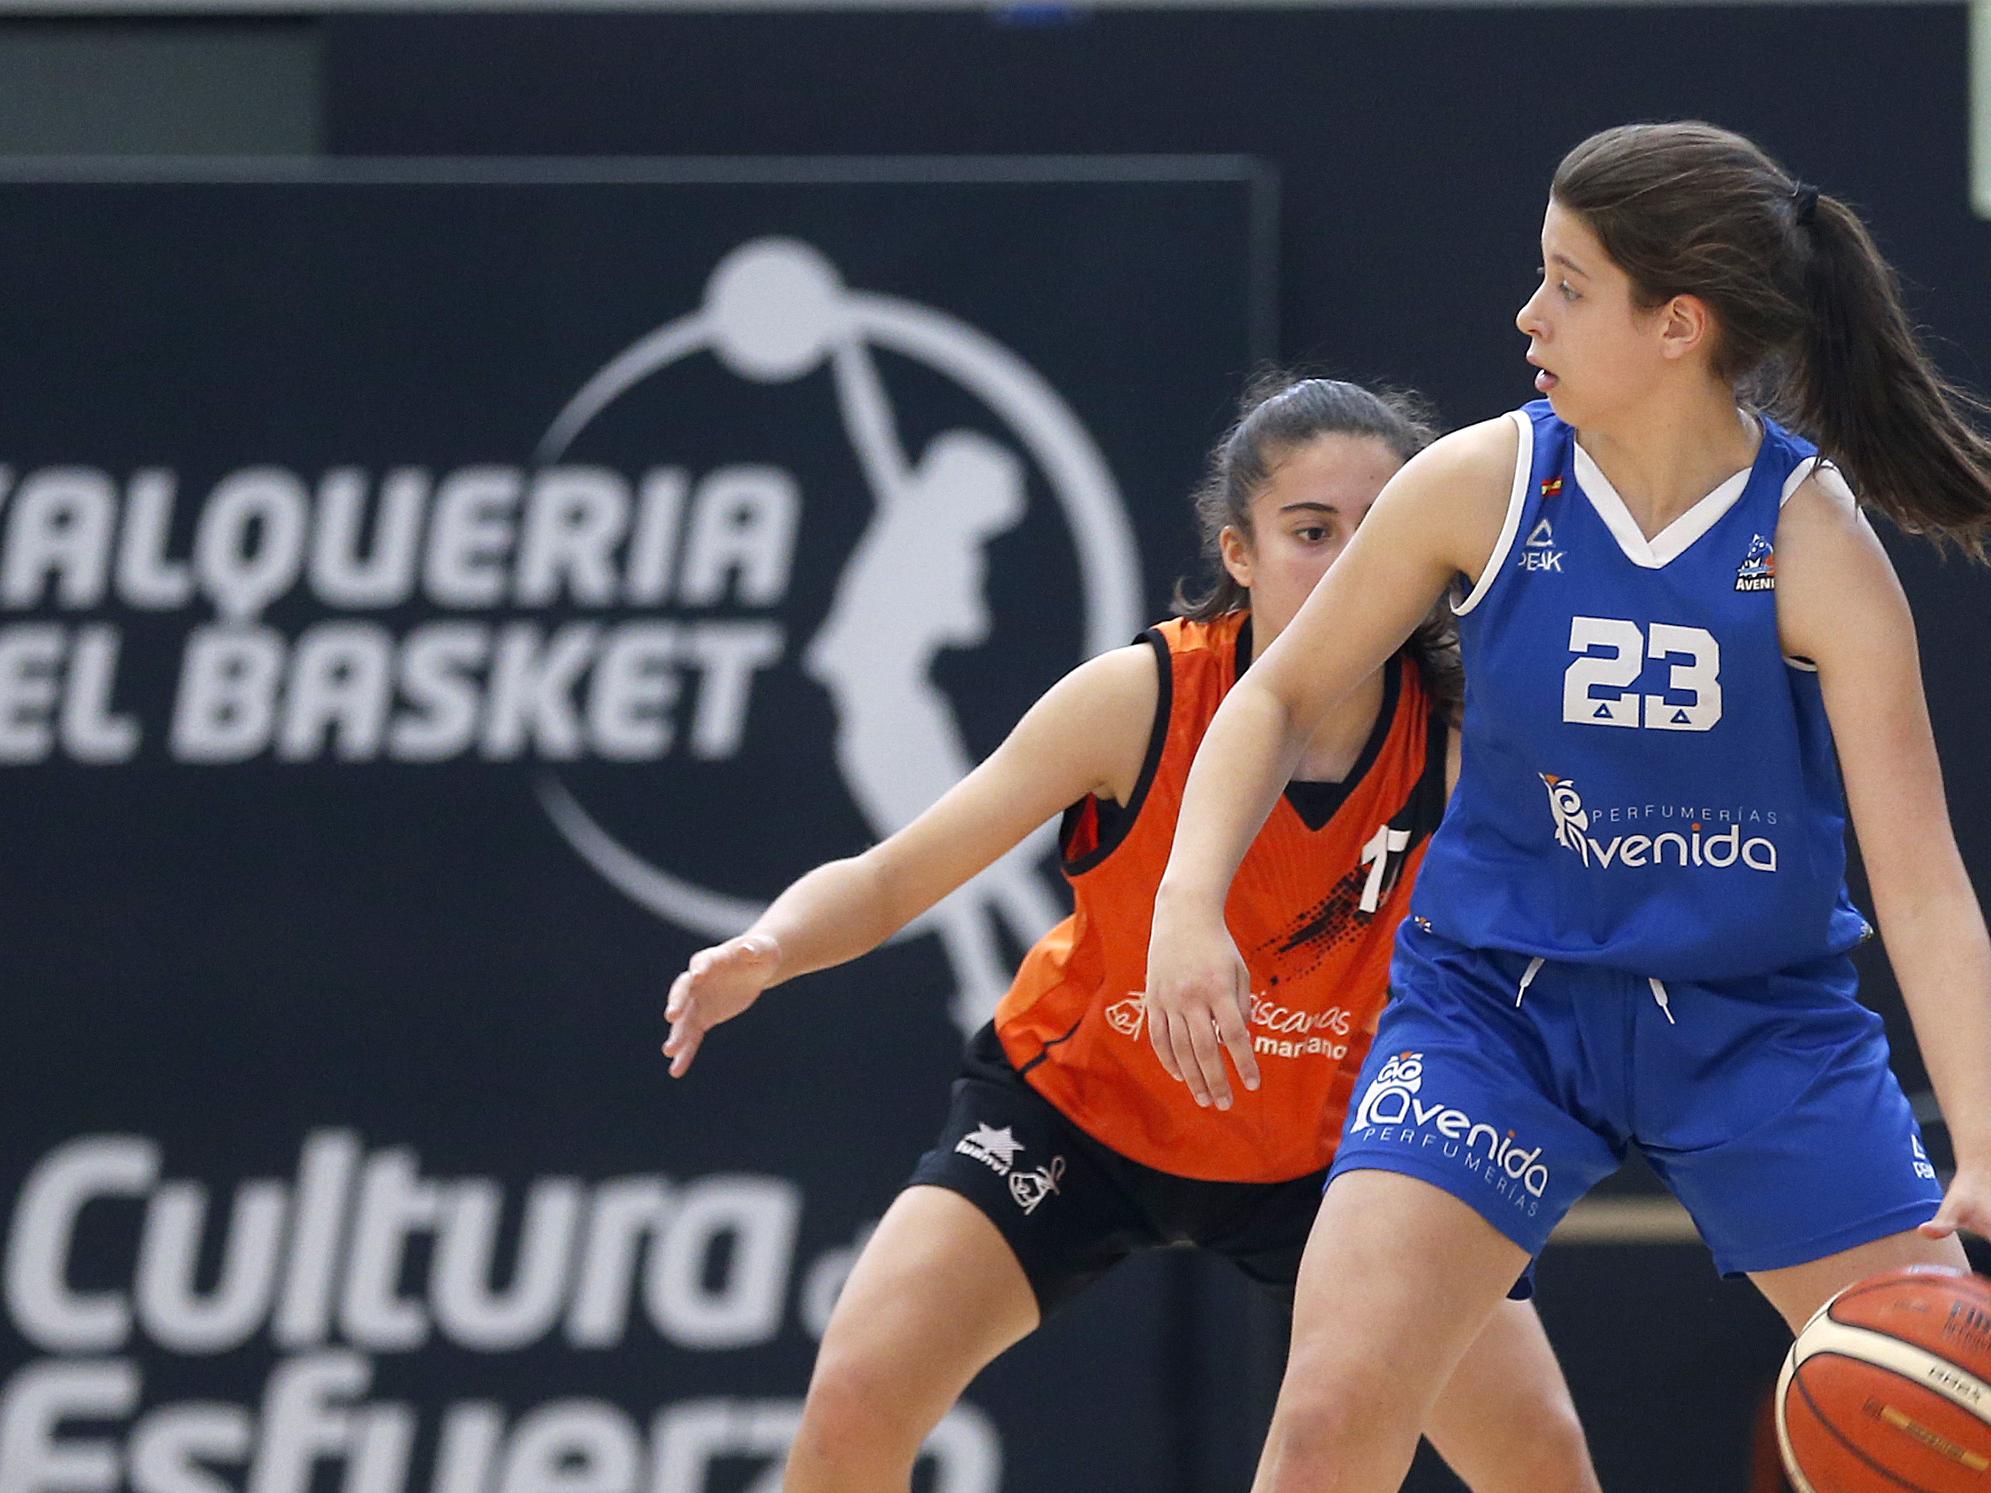 Slide-6 Campeonato de España Cadete Femenino València 2019